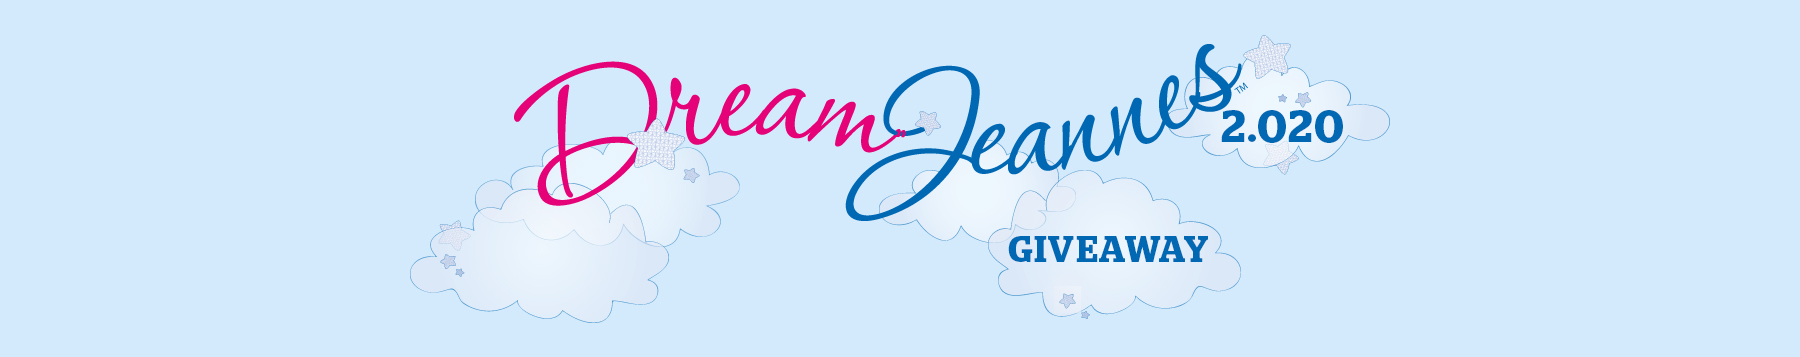 DreamJeannes™ 2.020 Giveaway